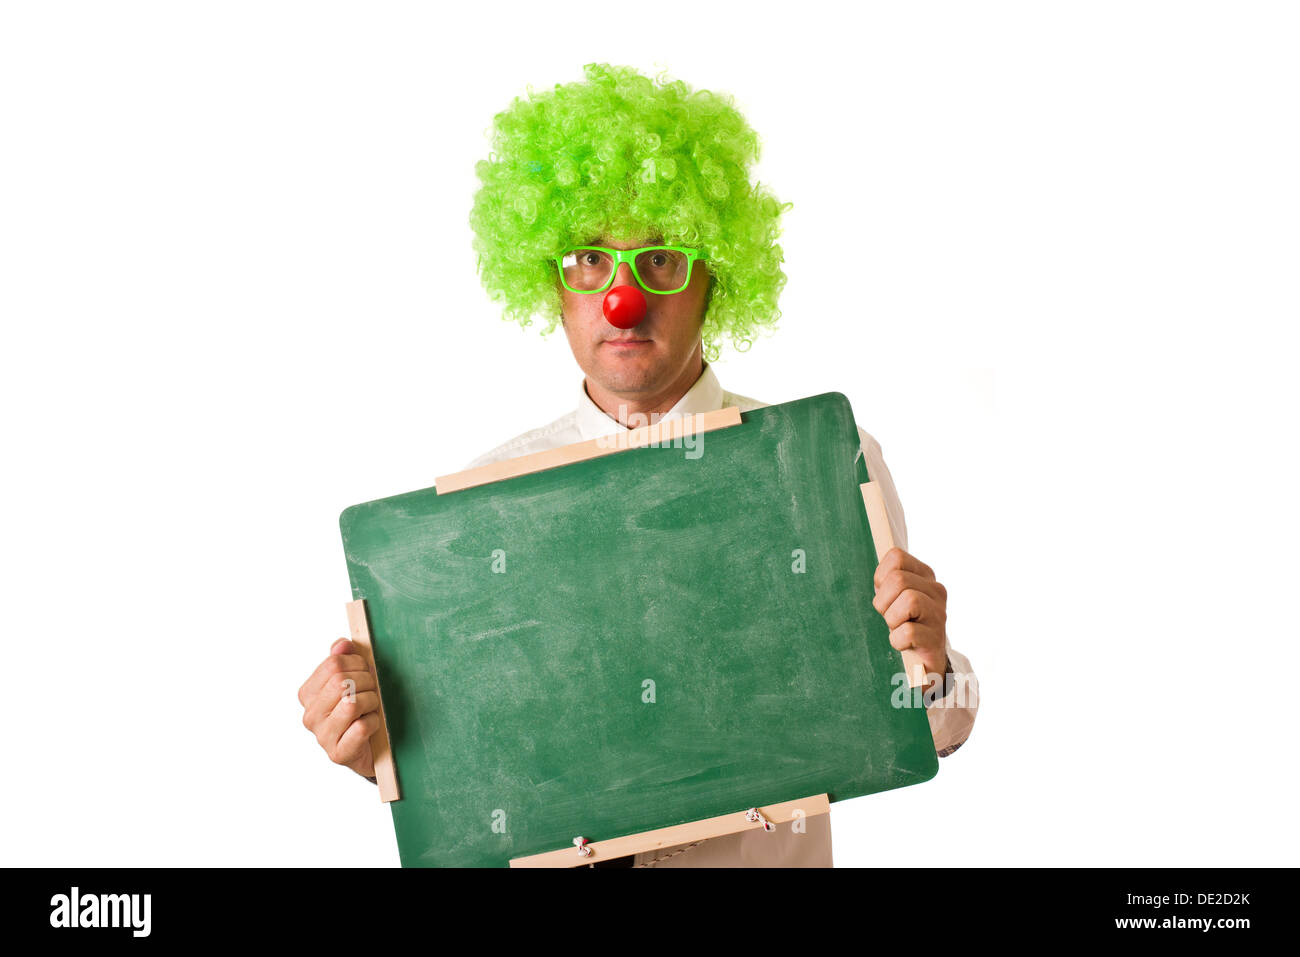 Clown holding chalkboard on white background. Stock Photo